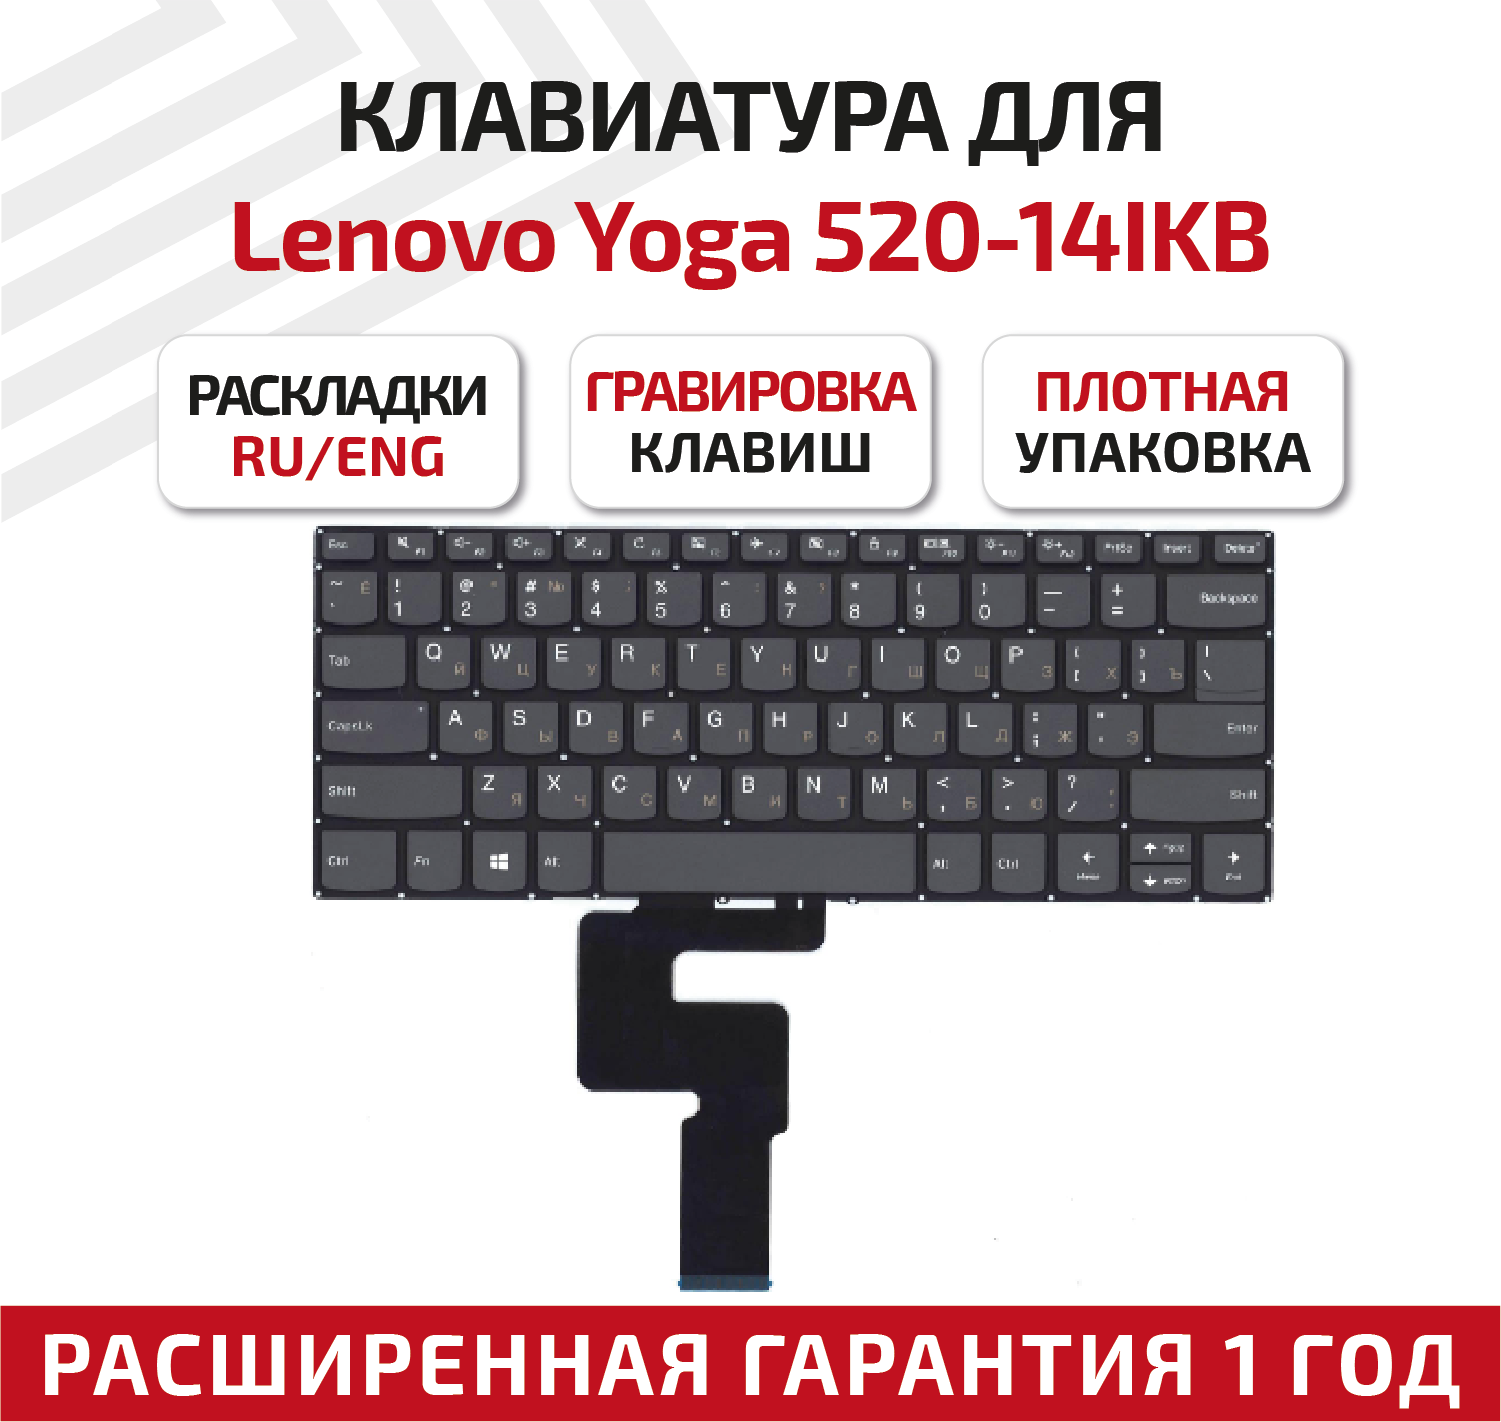 Клавиатура (keyboard) PC4C для ноутбука Lenovo Yoga 520-14IKB 720-15IKB 320-14 120S-14IAP 7000-14 V330-14ISK V330-14IKB V130-14IKB черная